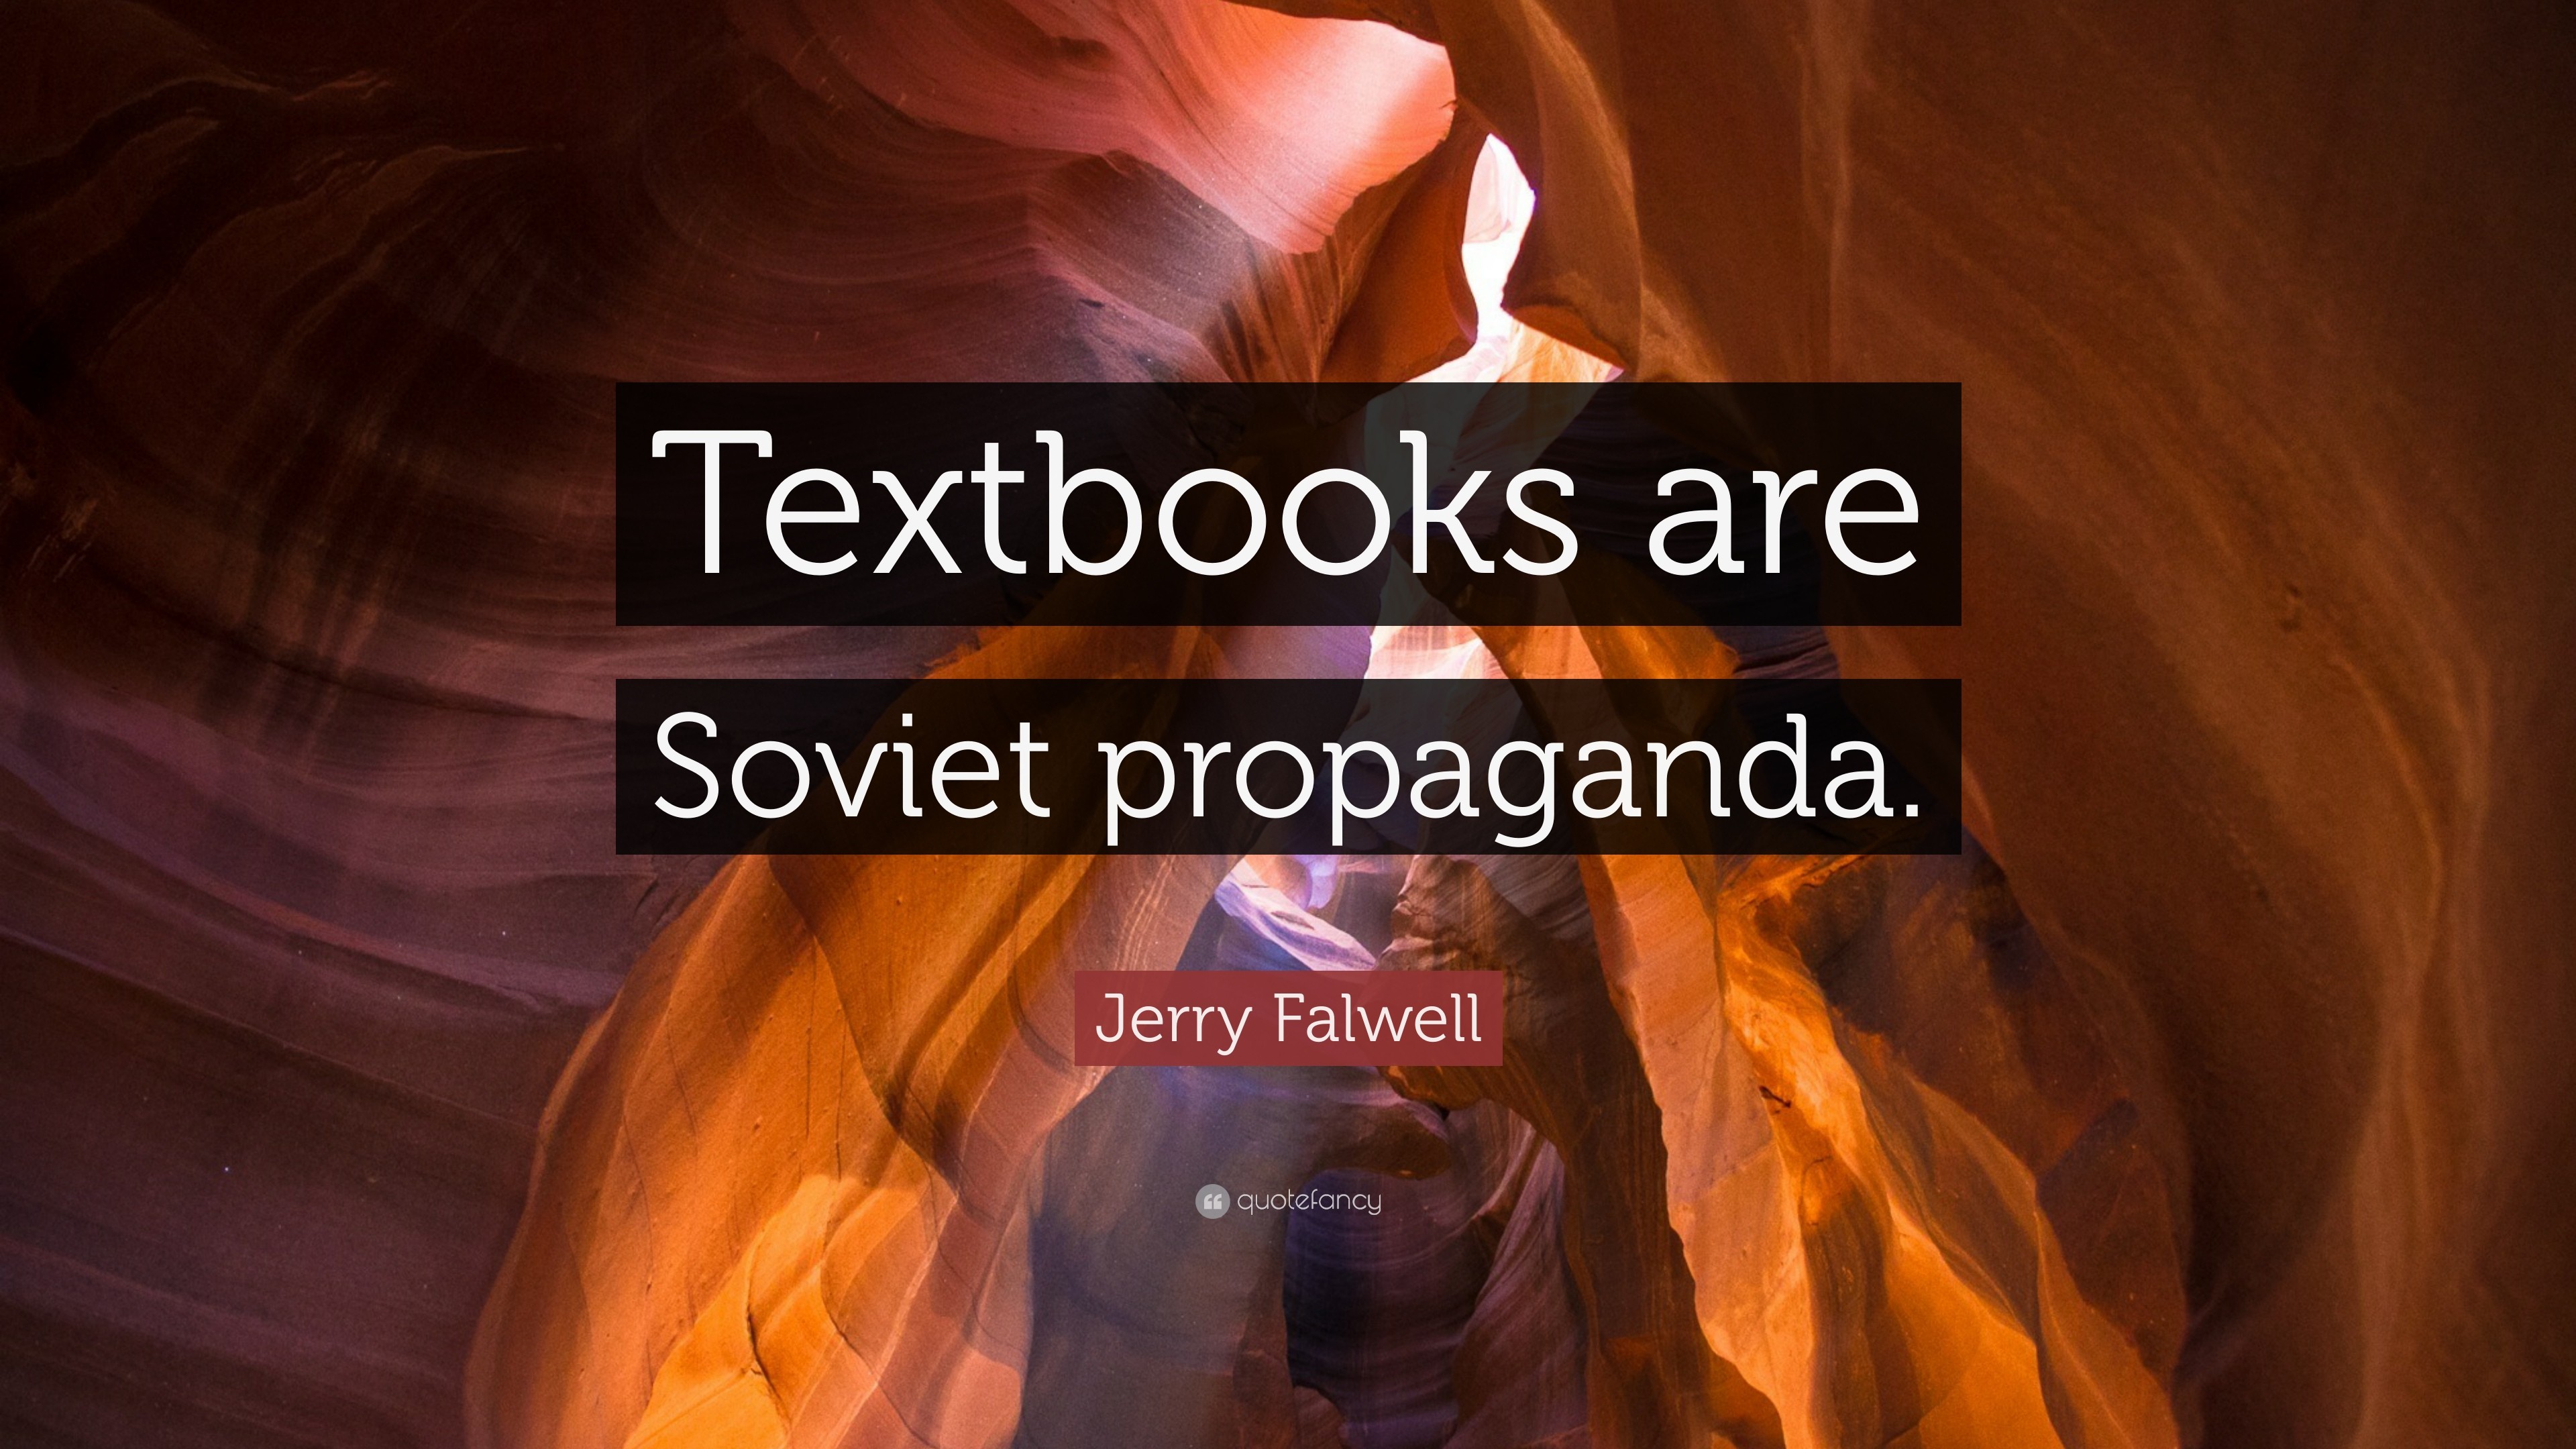 3840x2160 Jerry Falwell Quote: “Textbooks are Soviet propaganda.”